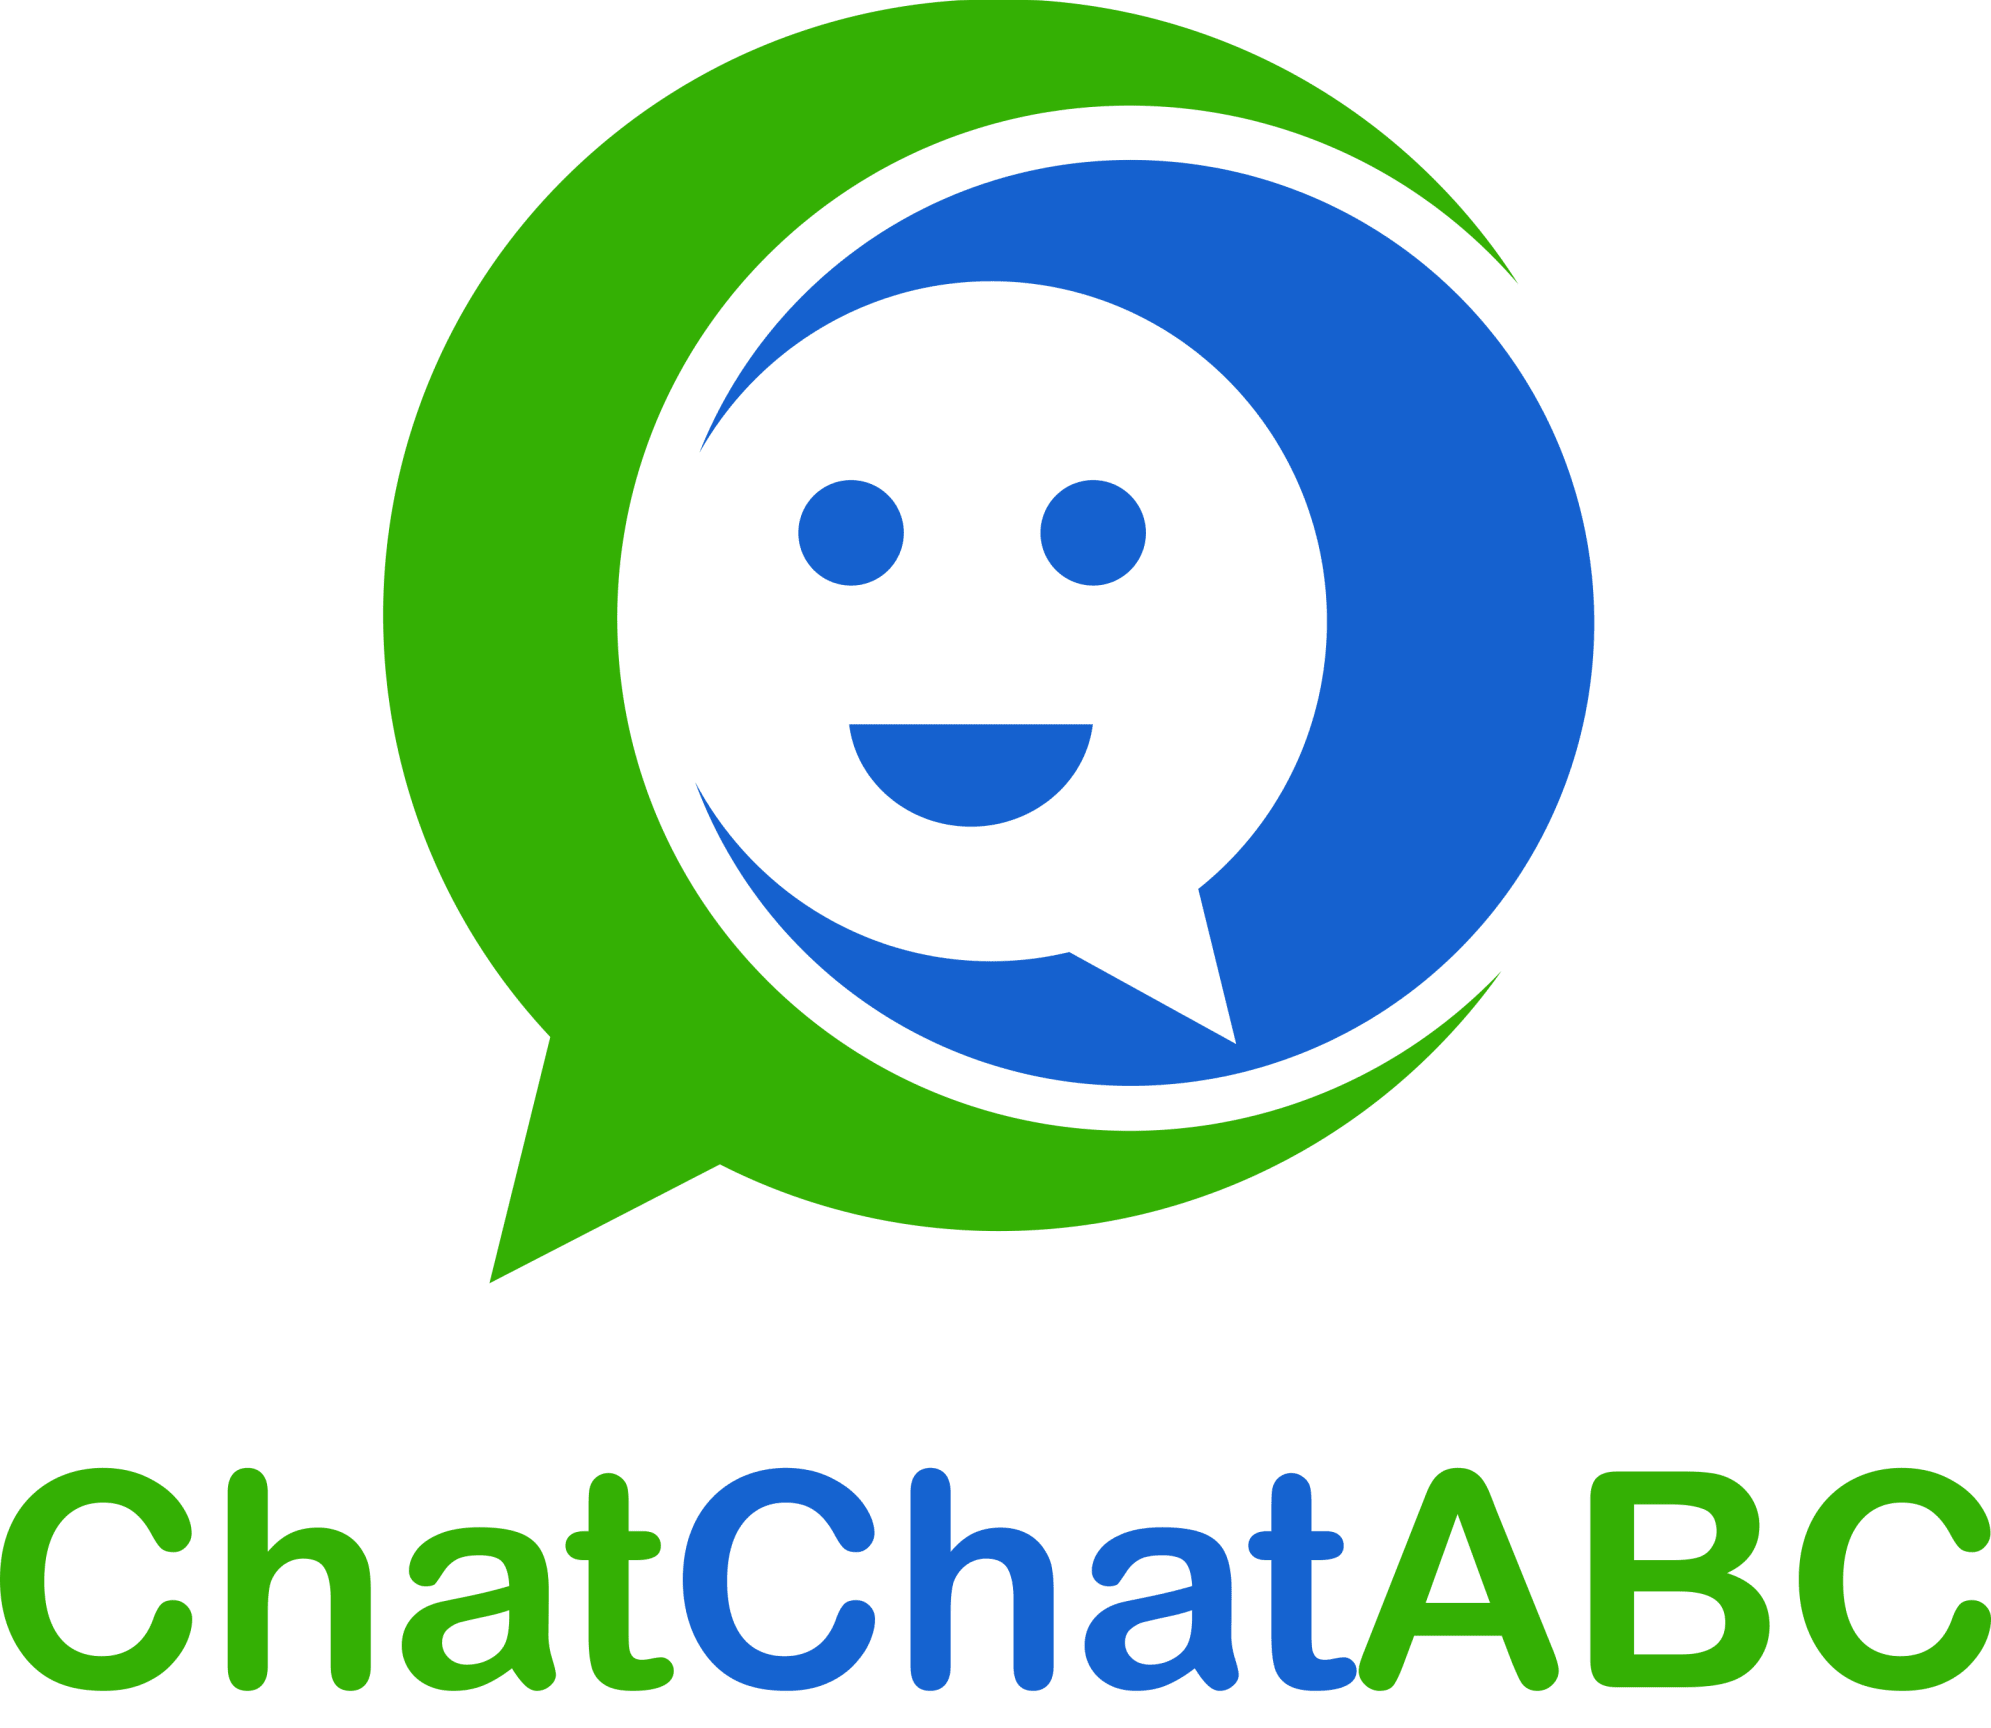 ChatChatABC Inc. logo